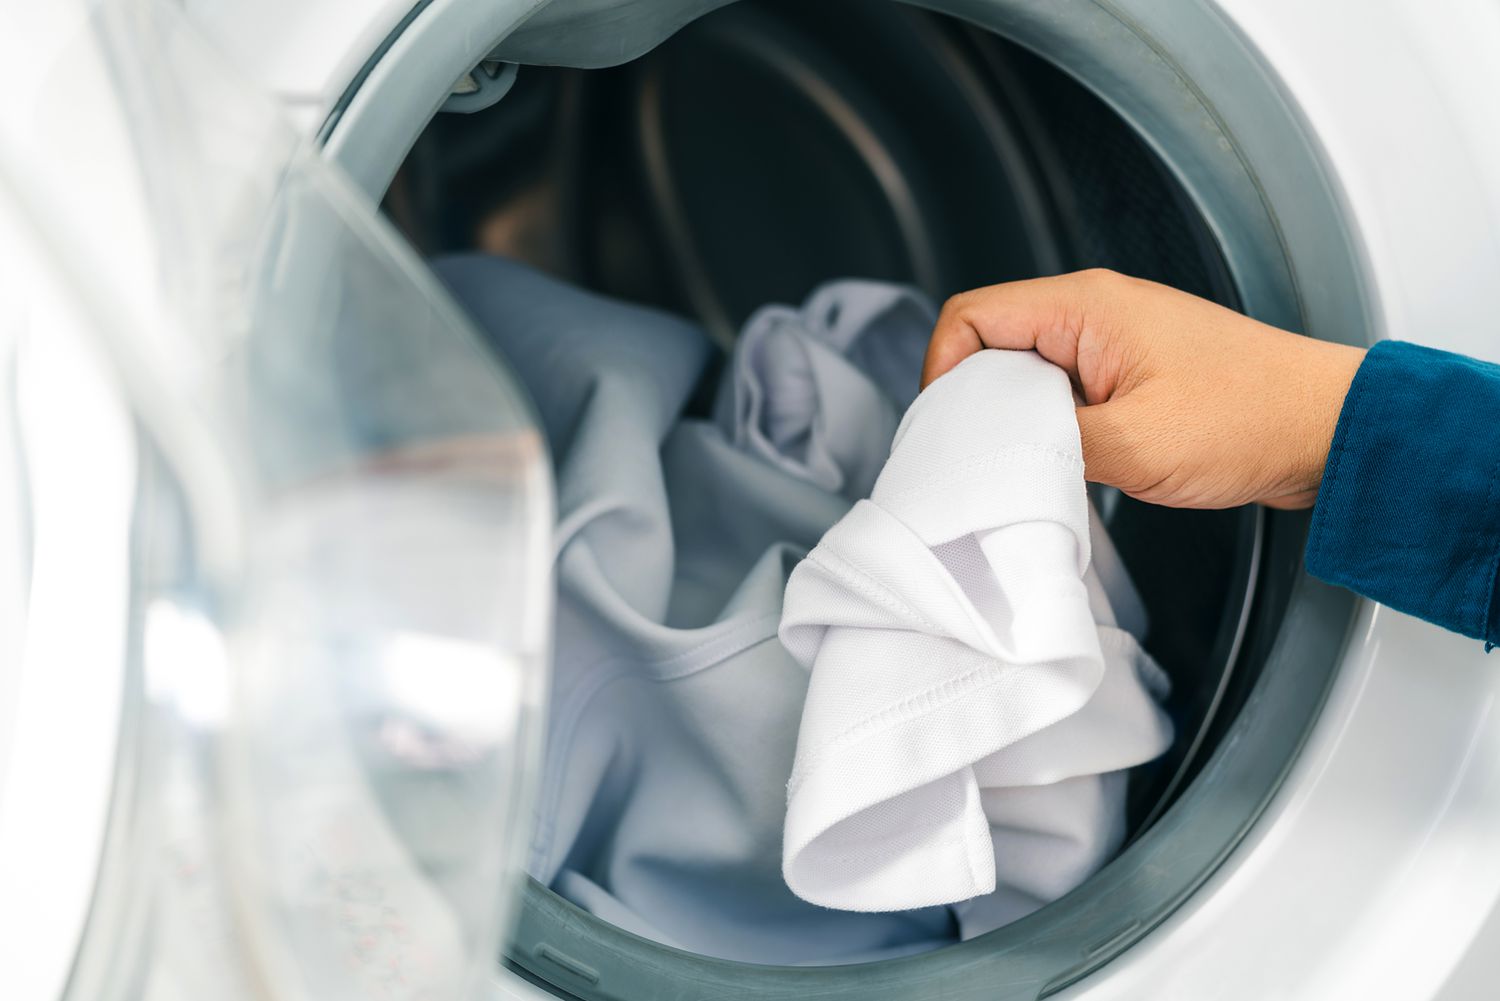 6x Washing Machine Tumble Dryer Clothes Laundry Softener Balls Eco Friendly ca 